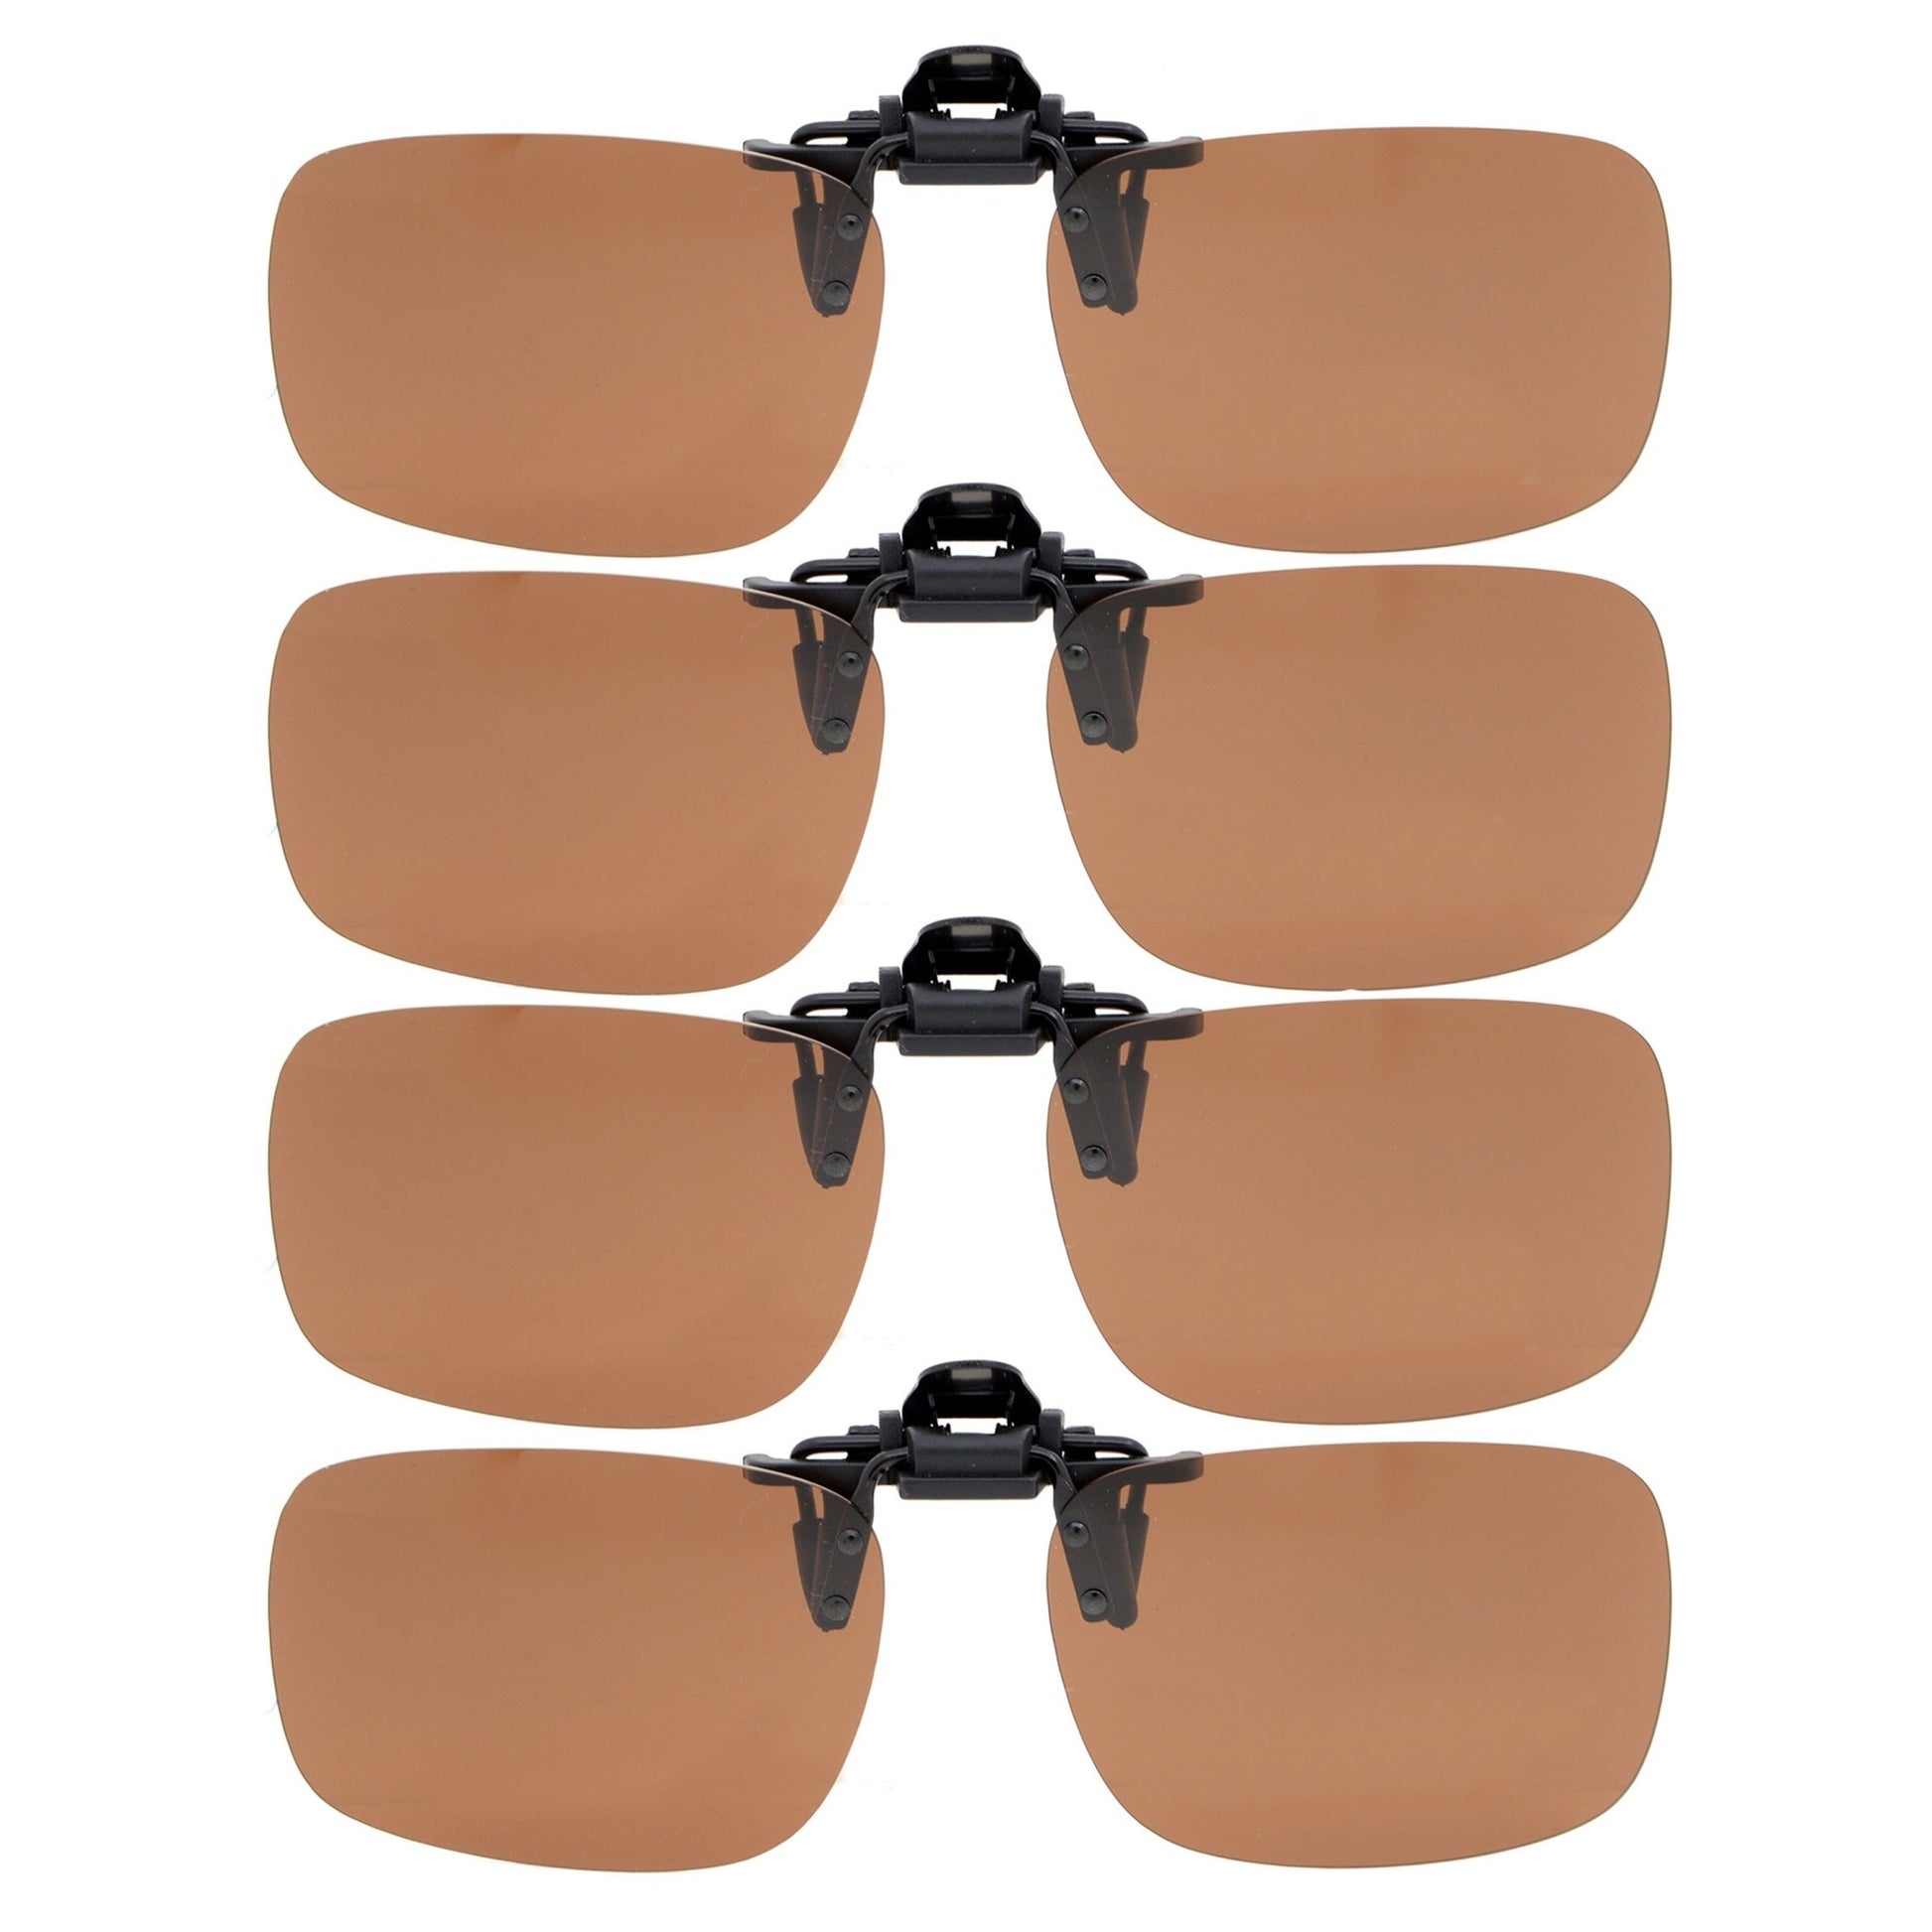 Rectanlge Sunglasses Clip On Polarized Brown JQ3